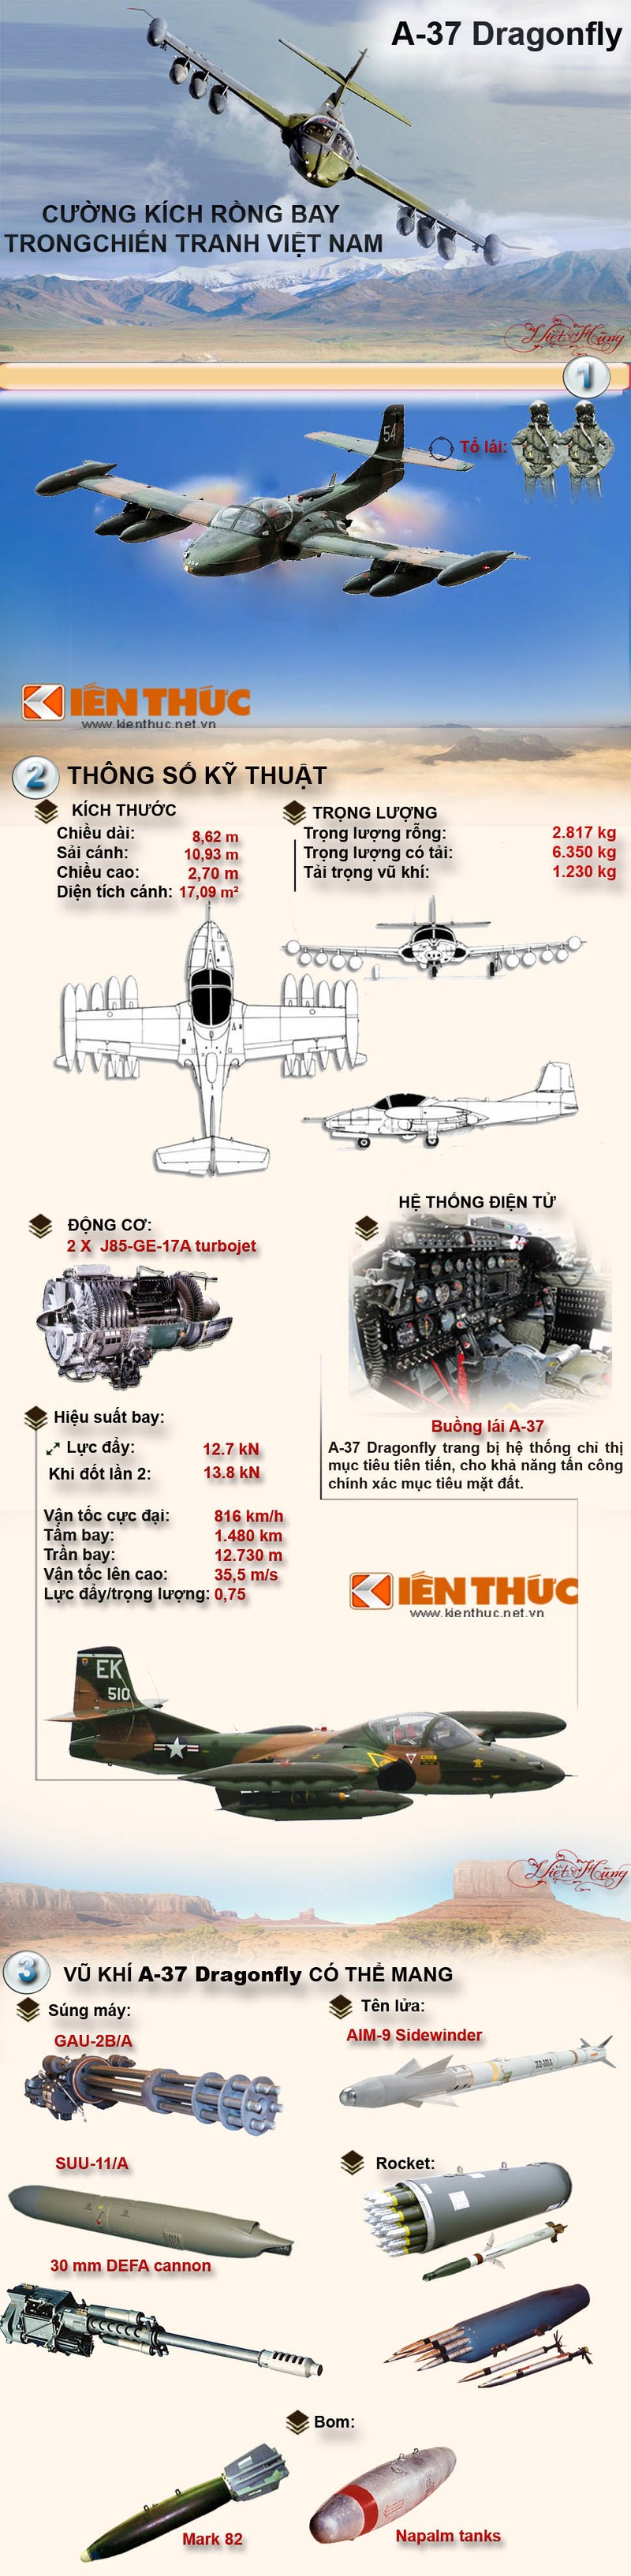 Infographic: Suc manh cuong kich A-37 Viet Nam tung dung